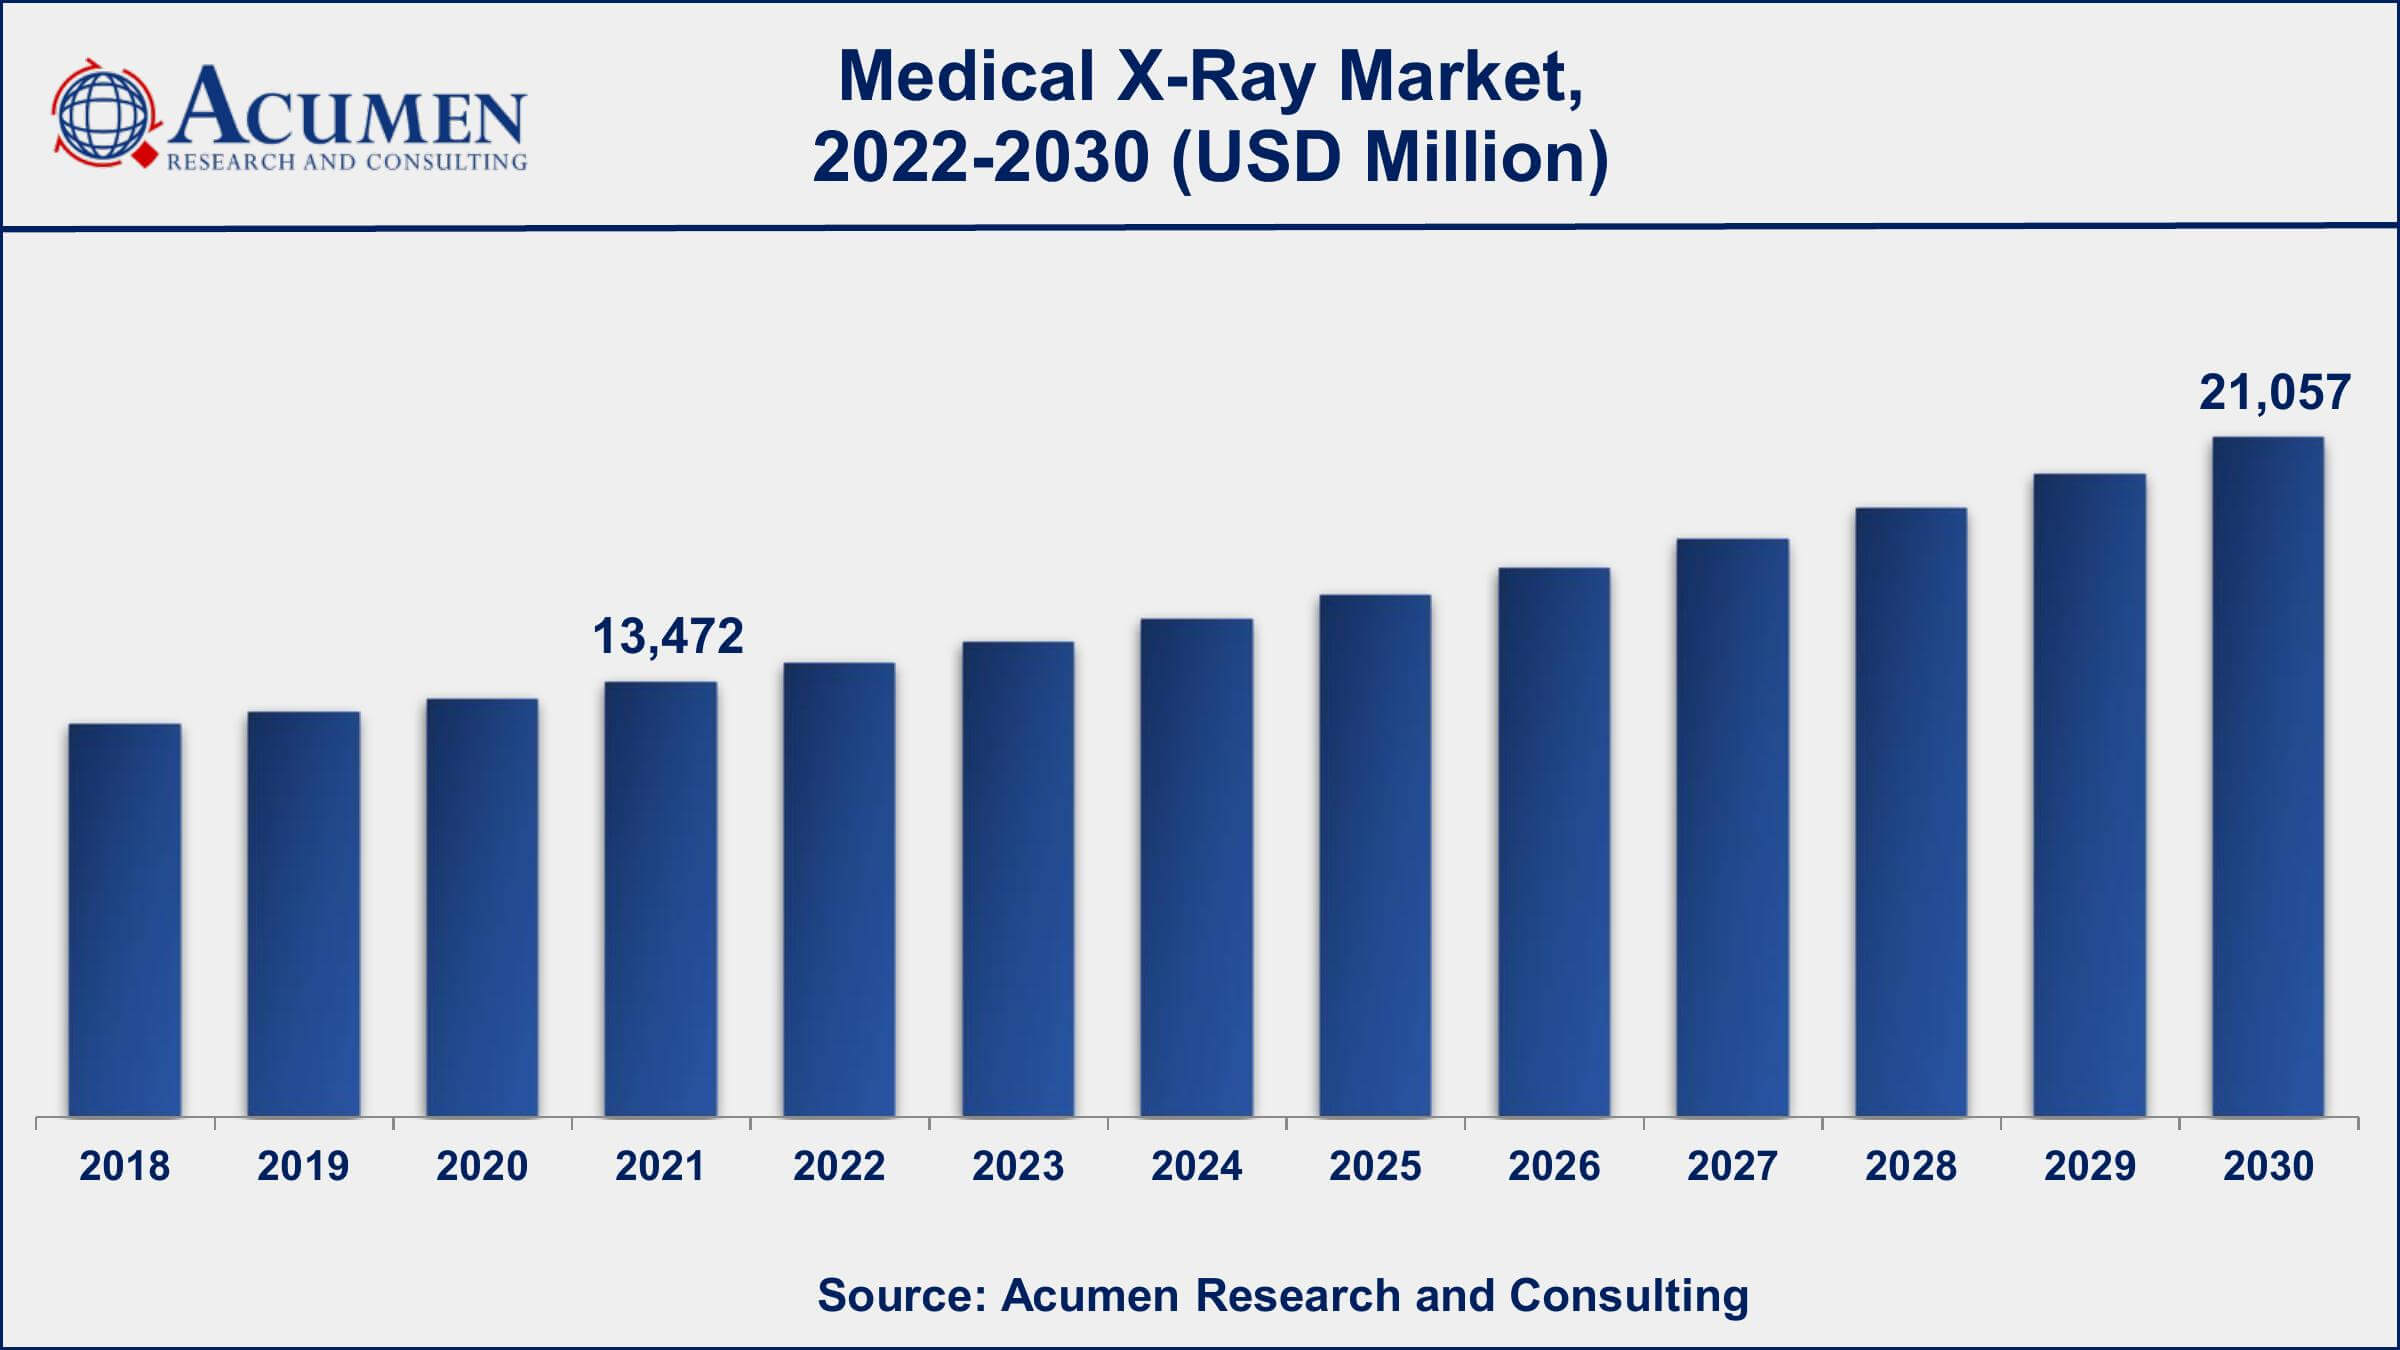 Medical X-Ray Market Analysis